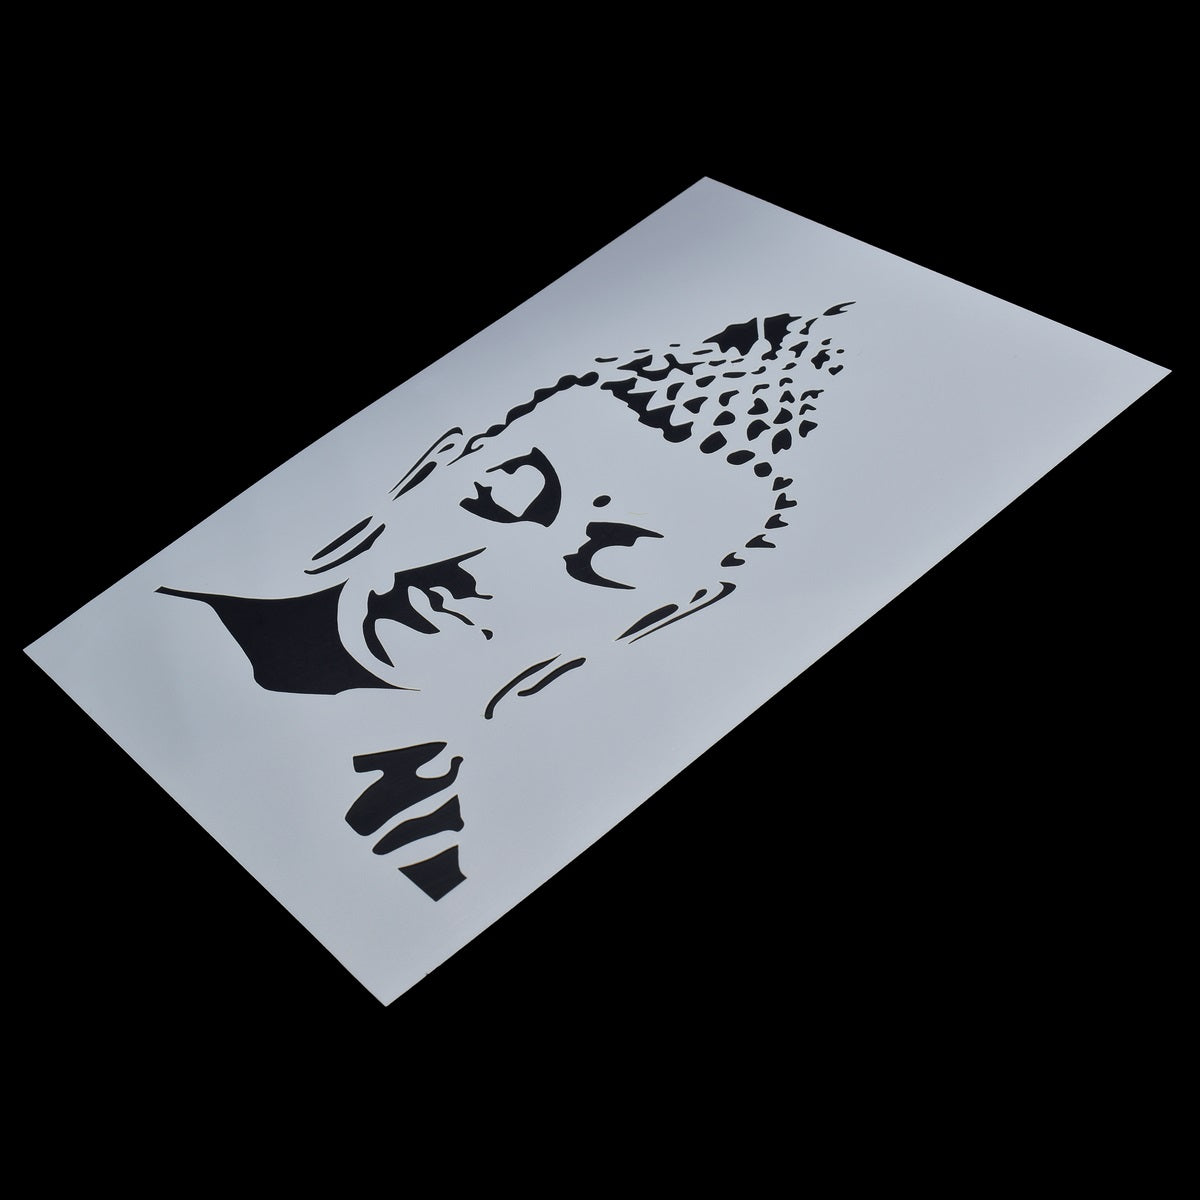 jags-mumbai Stencil Serene Gautam Buddha Stencil - Jags Stencil Plastic A5 (JSPA5-5)